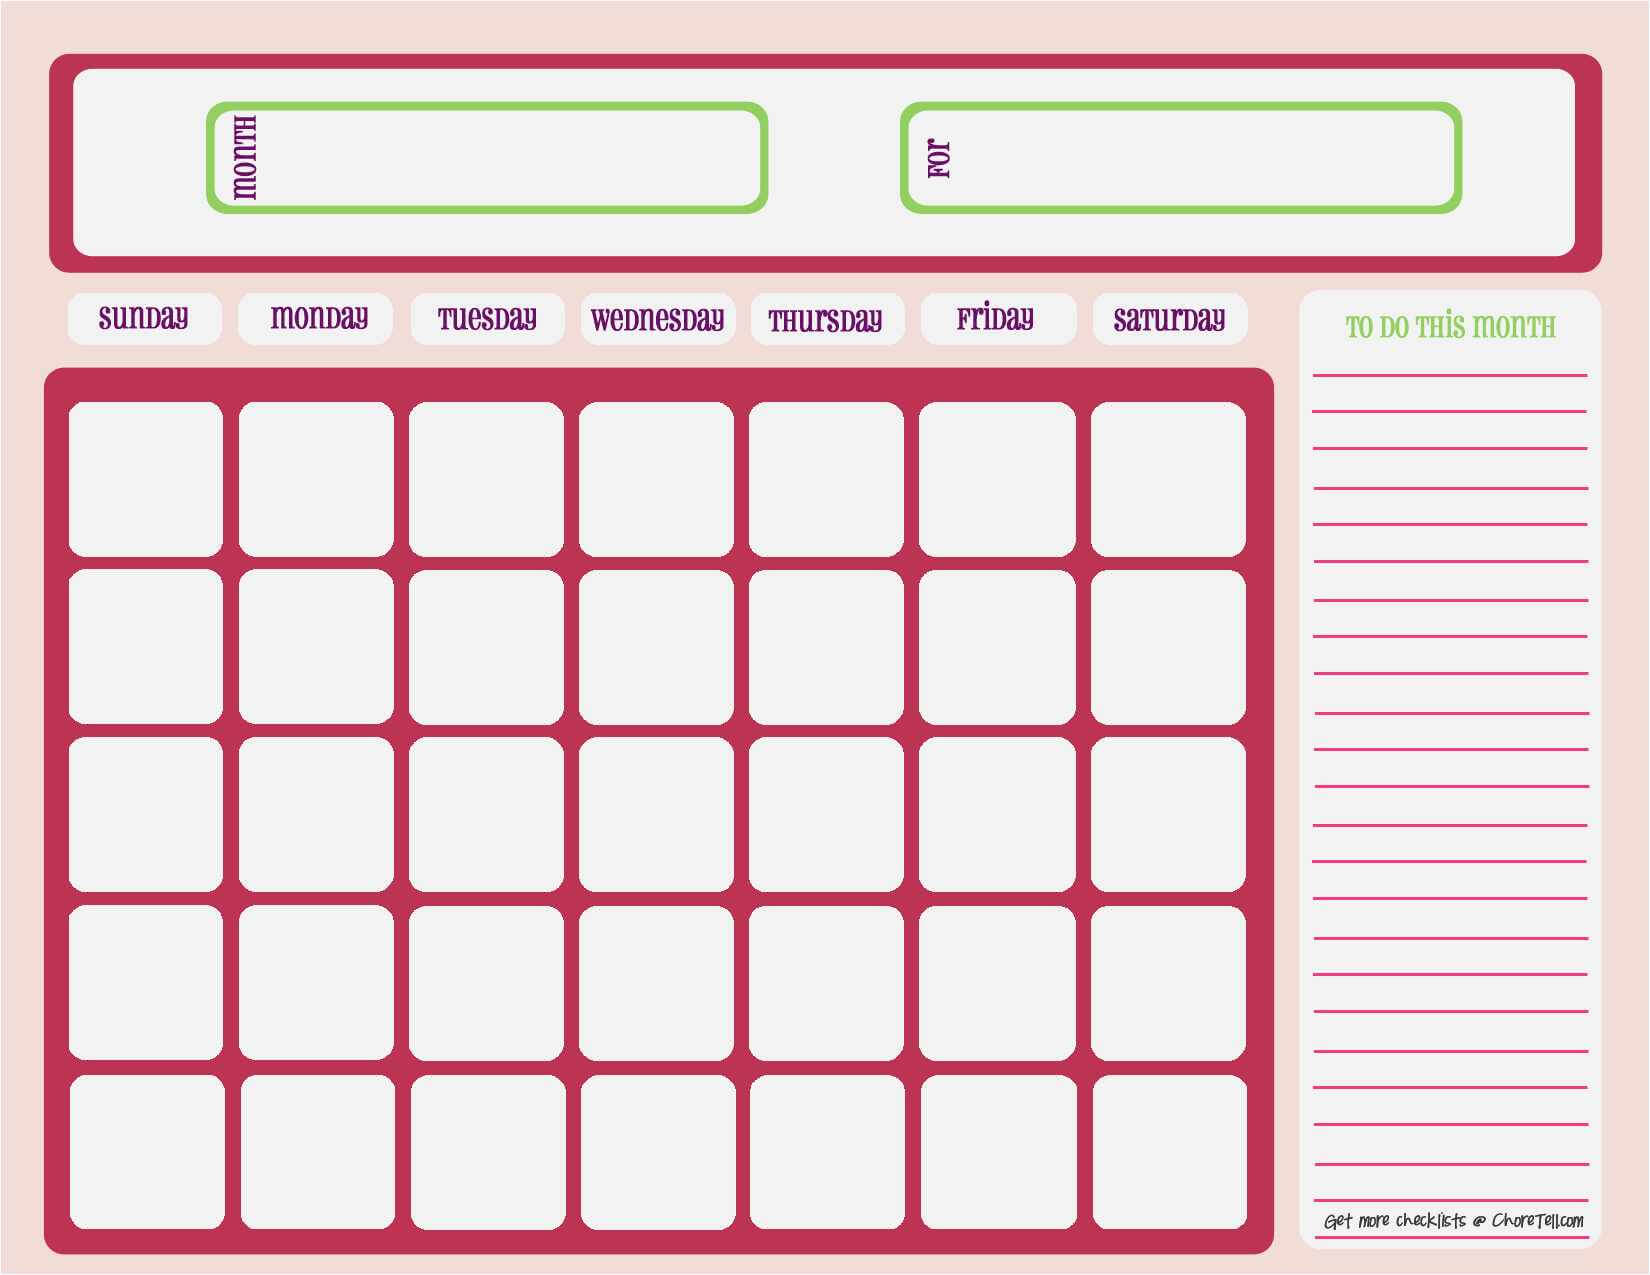 Download Printables Calendars For Kids Lovely Elegant Throughout Blank Calendar Template For Kids